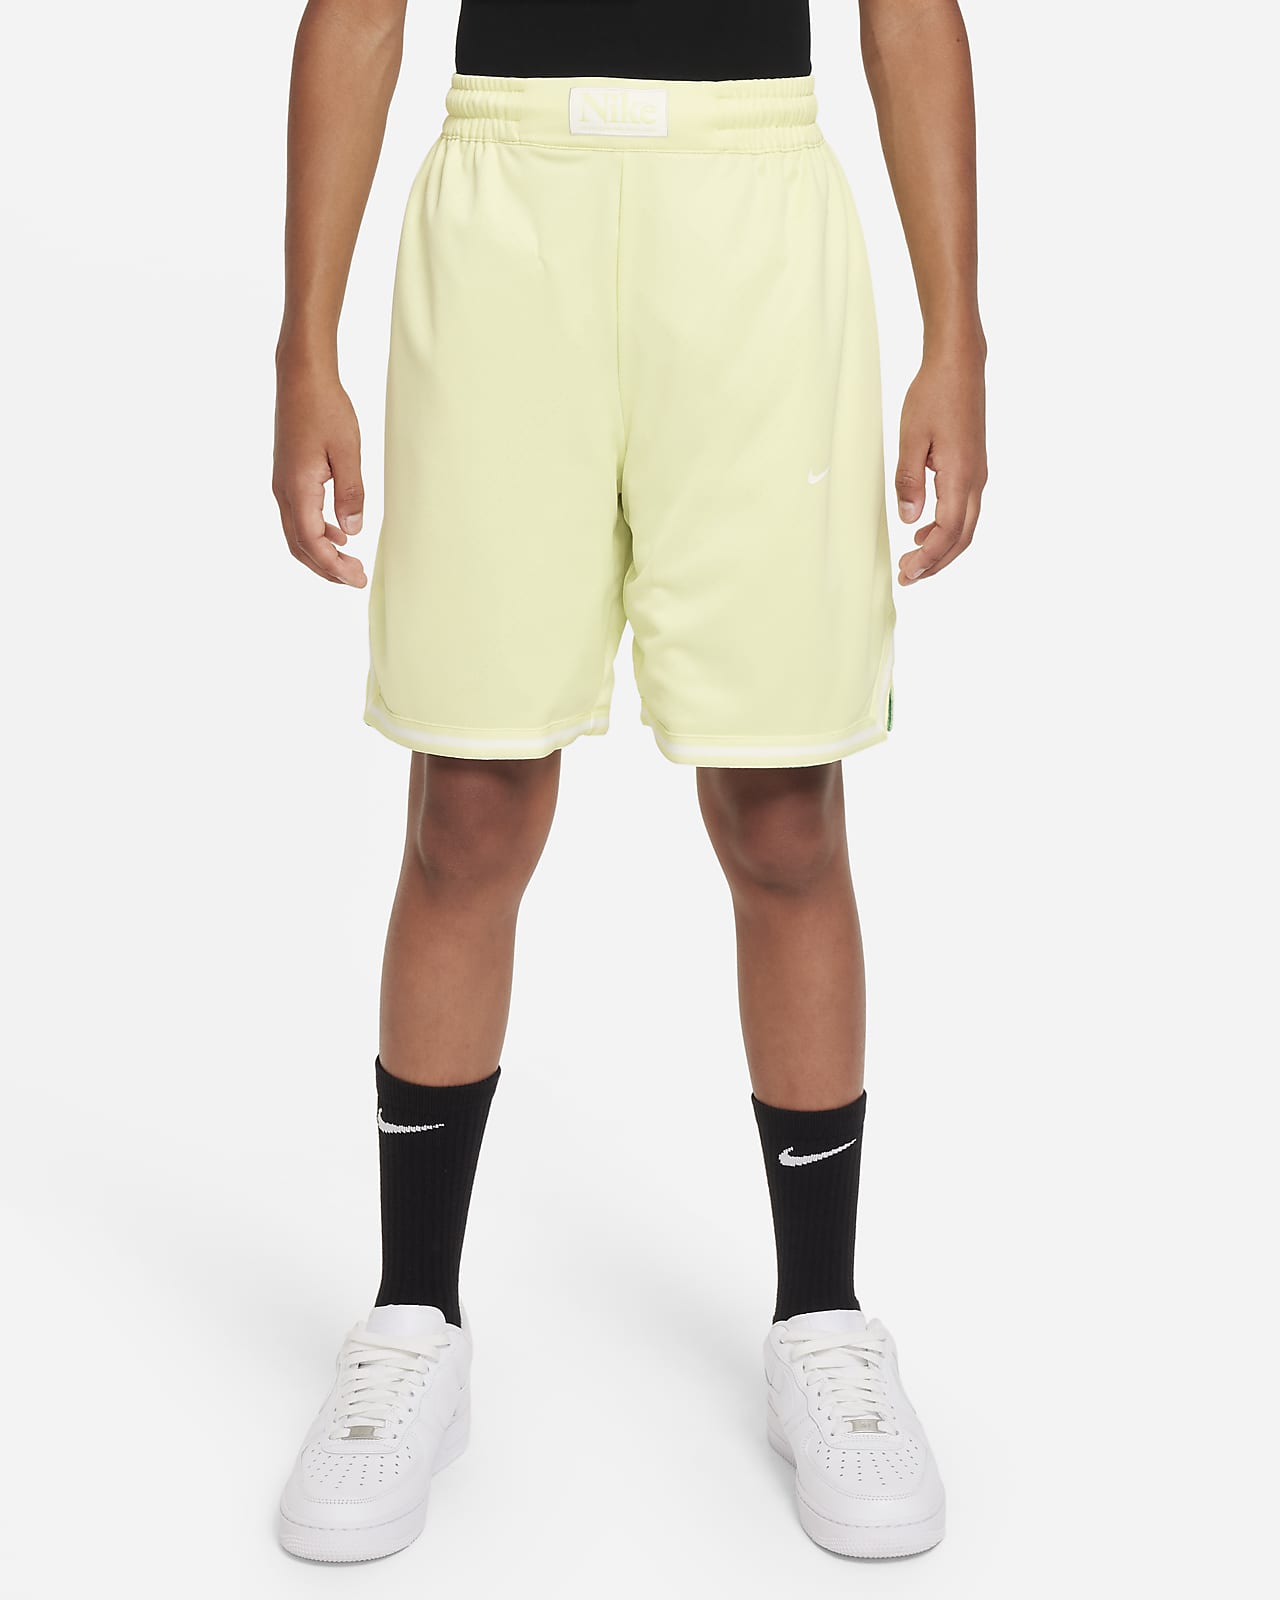 Nike Culture of Basketball Big Kids' (Boys') Reversible Basketball Jersey